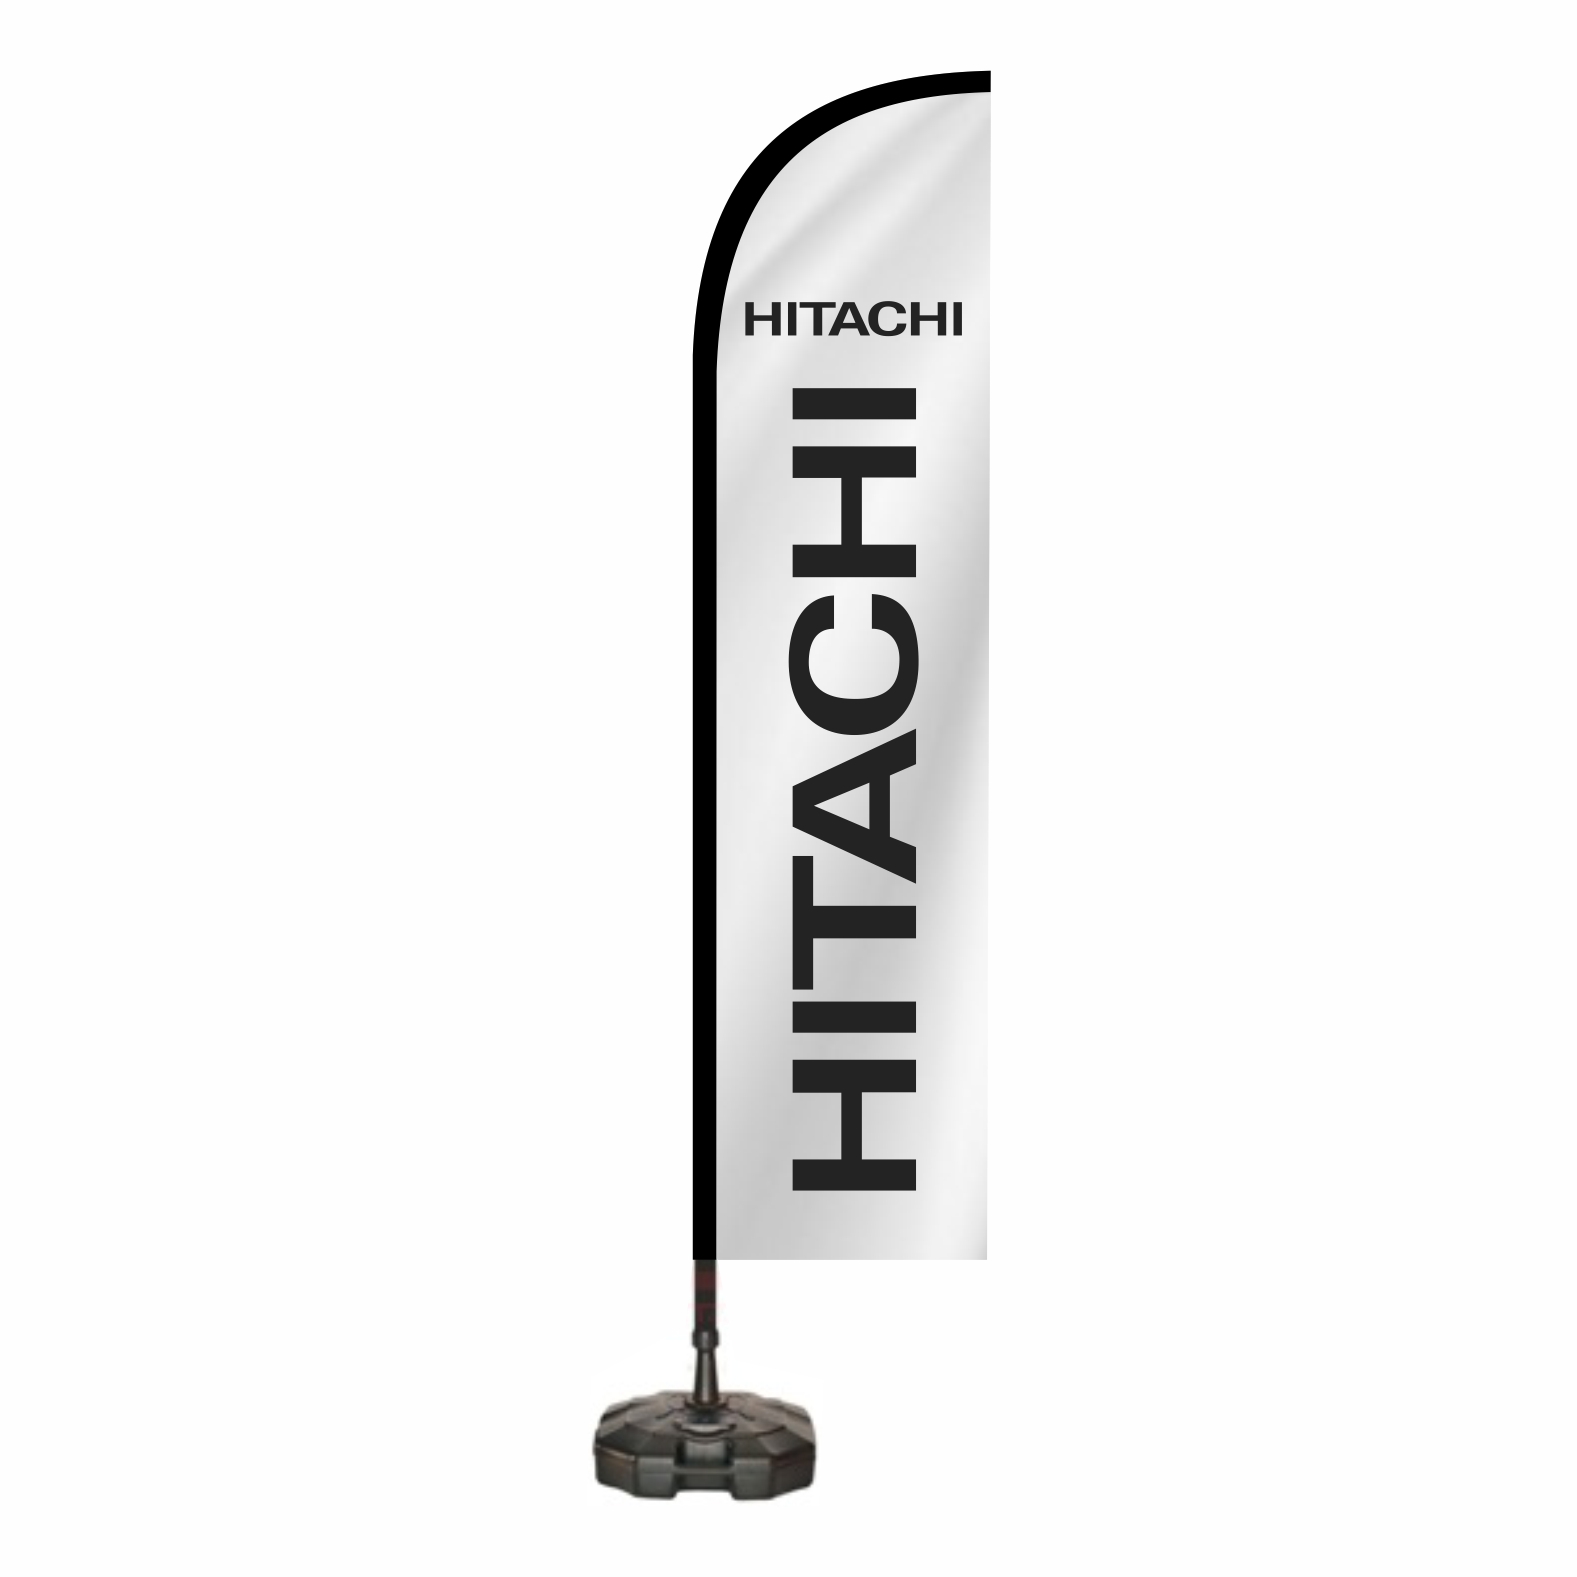 Hitachi Reklam Bayra zellikleri